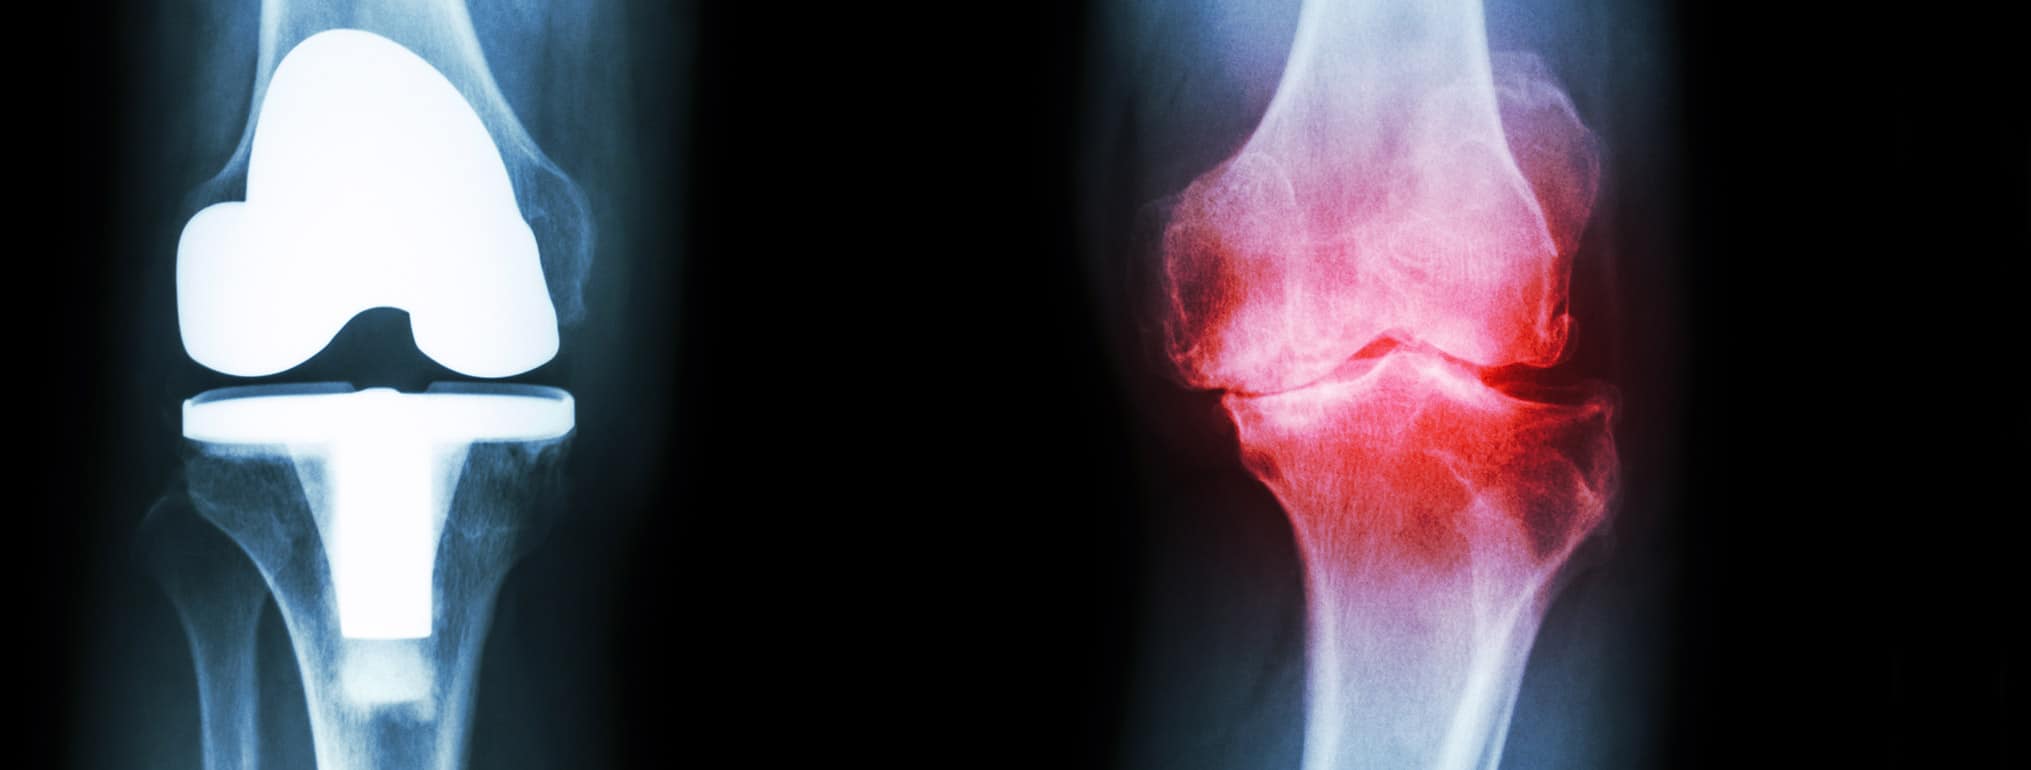 Osteoarthritis | Causes, Symptoms, & Treatment for Arthritic Pain